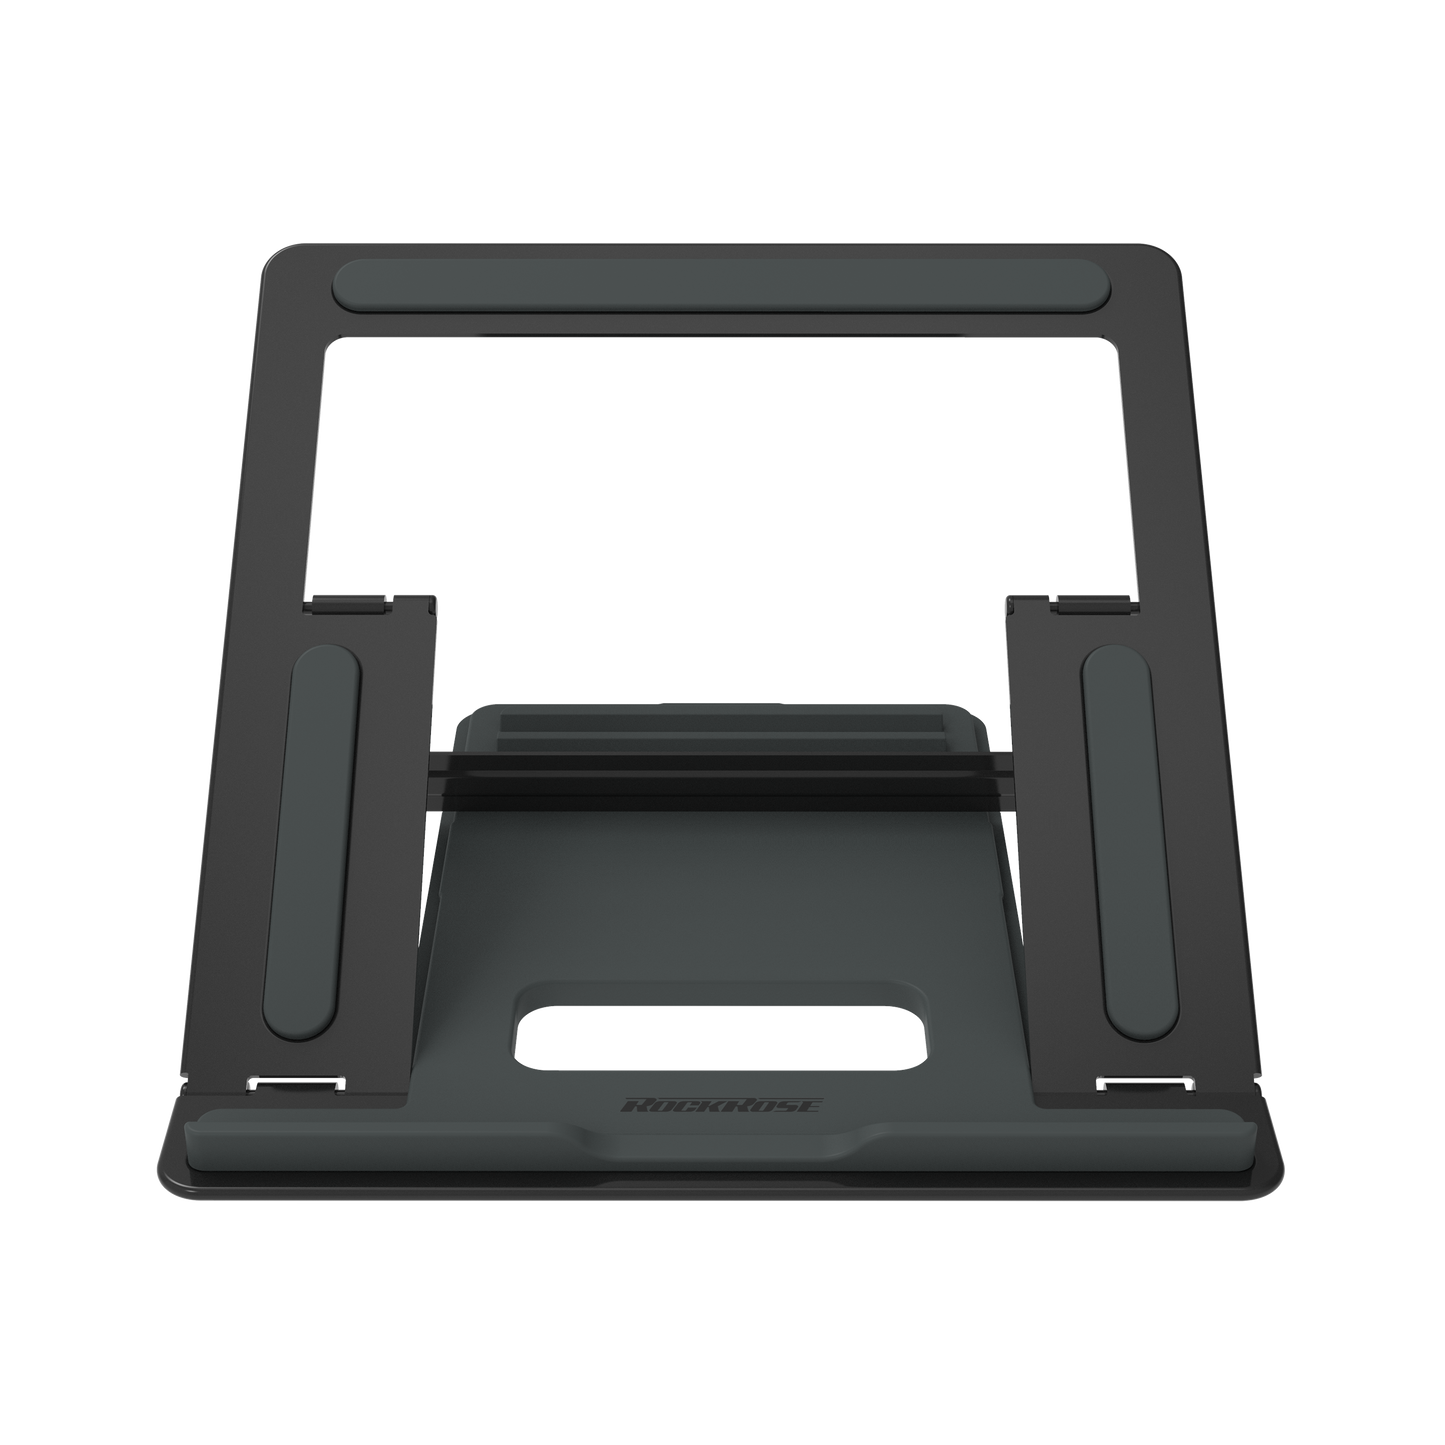 RockRose Anyview Master Fully Foldable Ergonomic 4-Level Adjustable Metal Laptop Stand